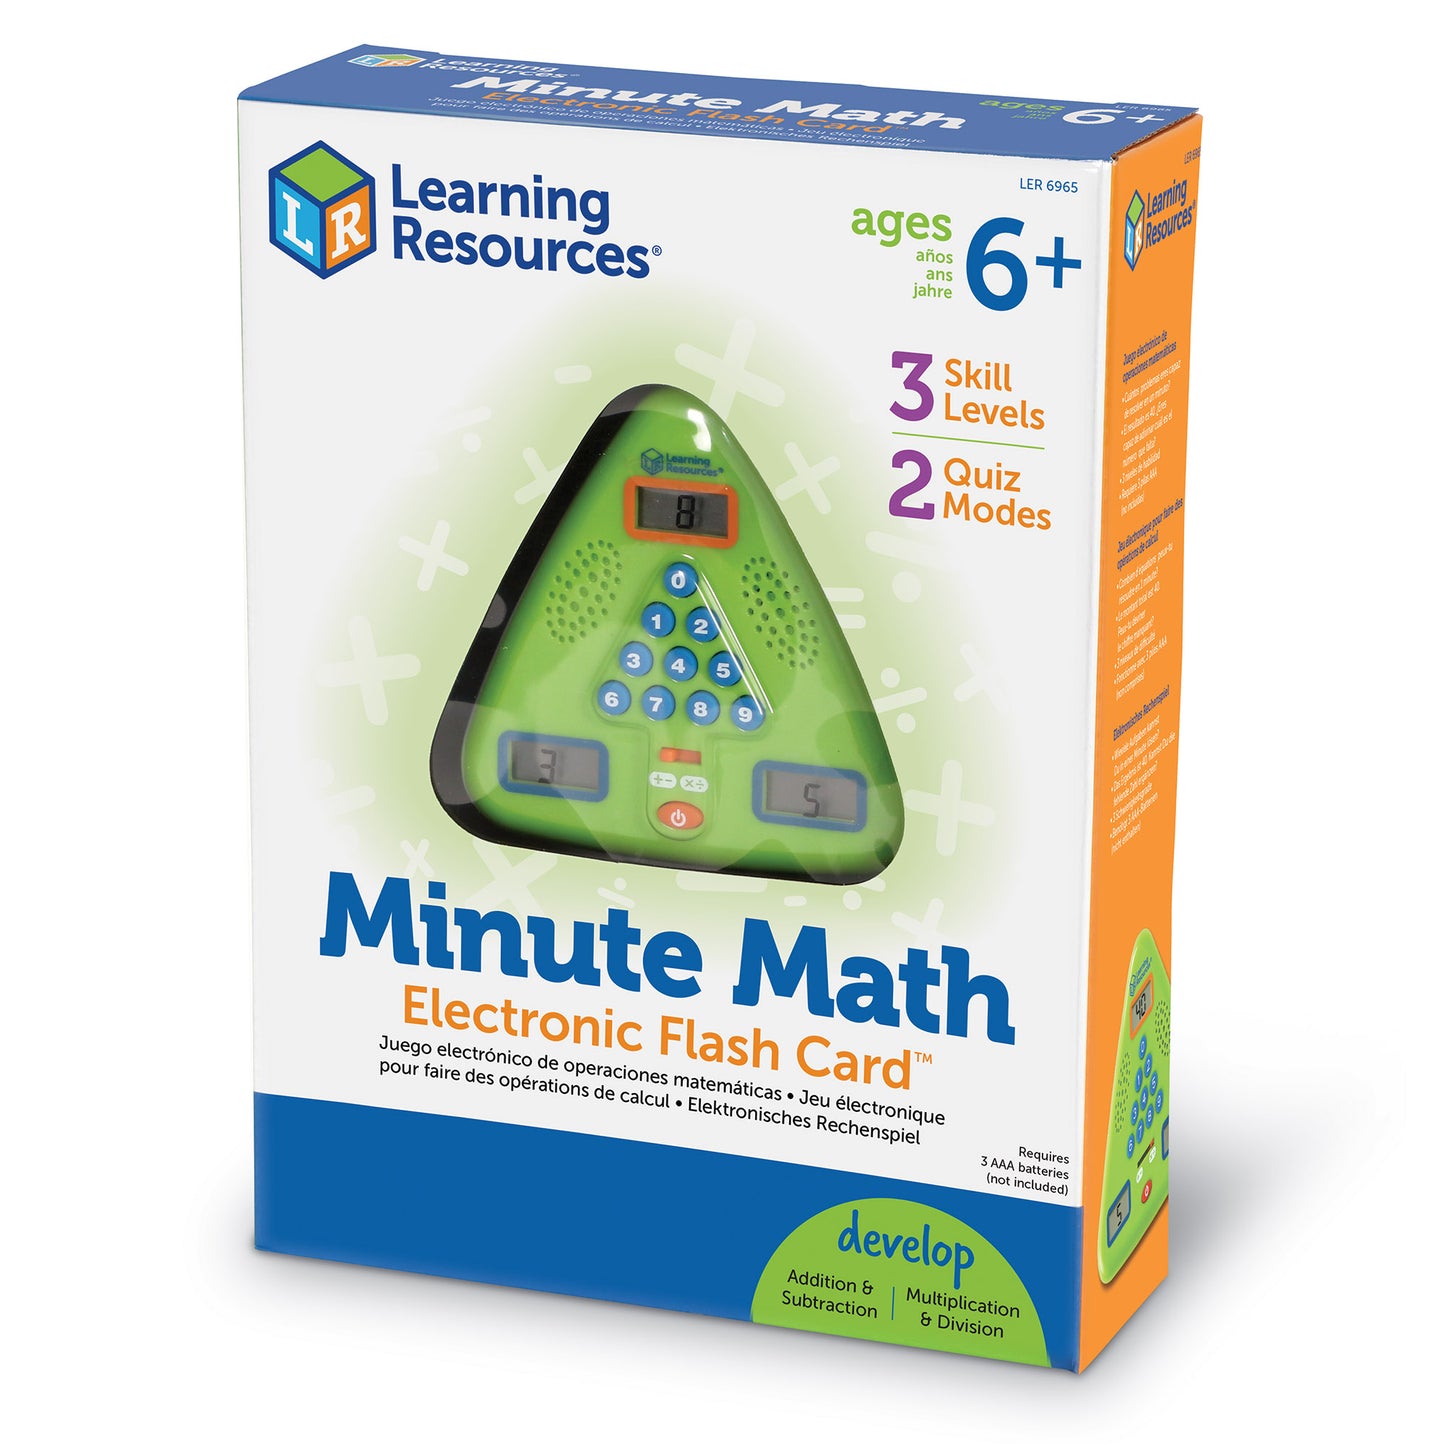 Minute Math Electronic Flash Card